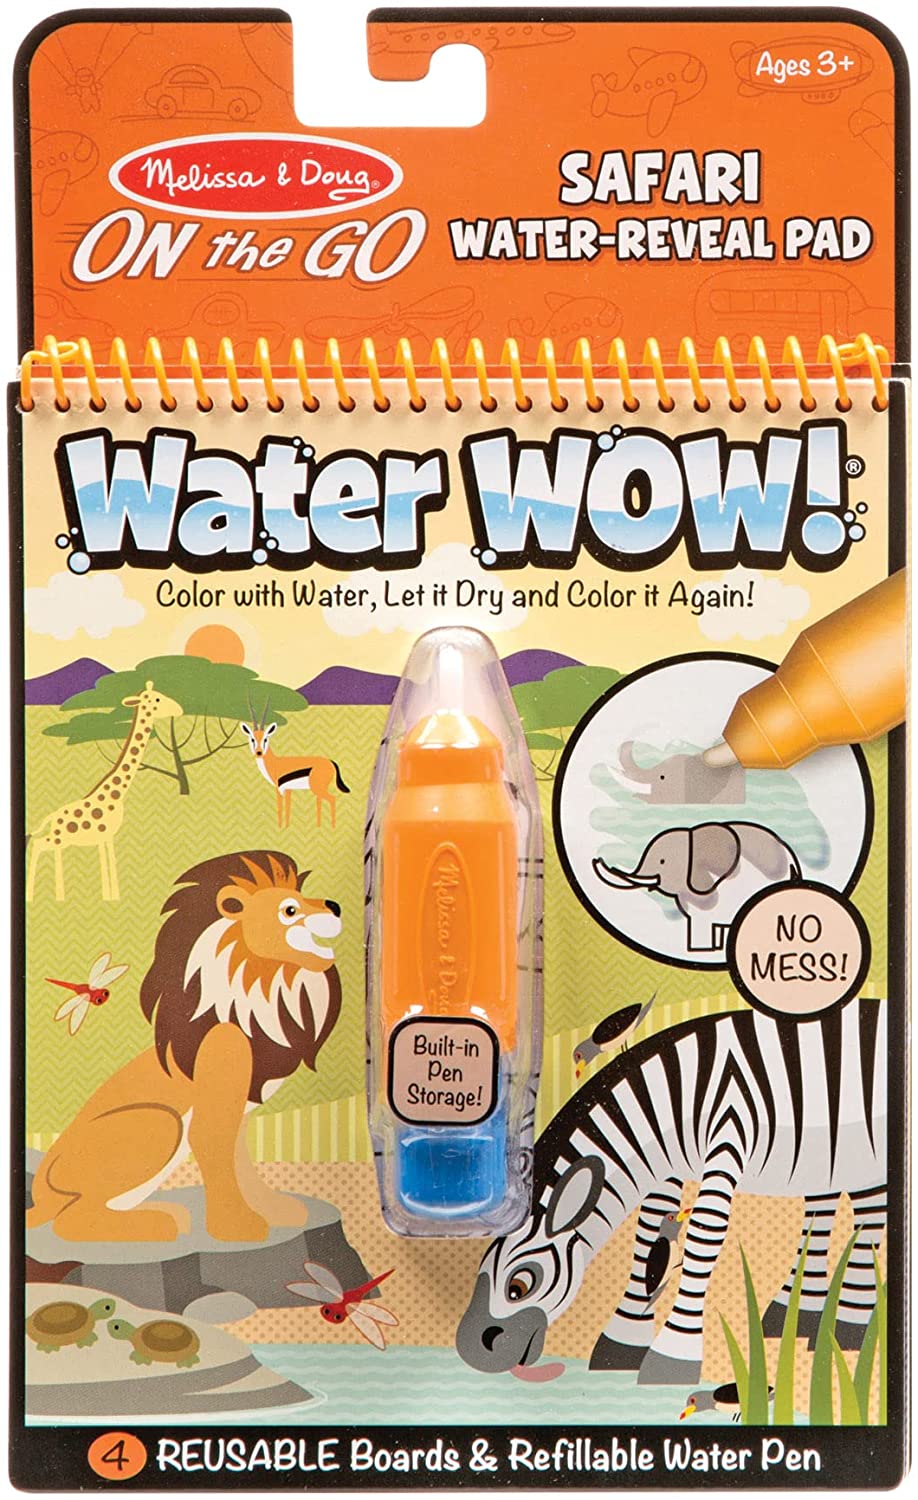 Water Wow! - Safari Water Reveal Pad by Melissa & Doug